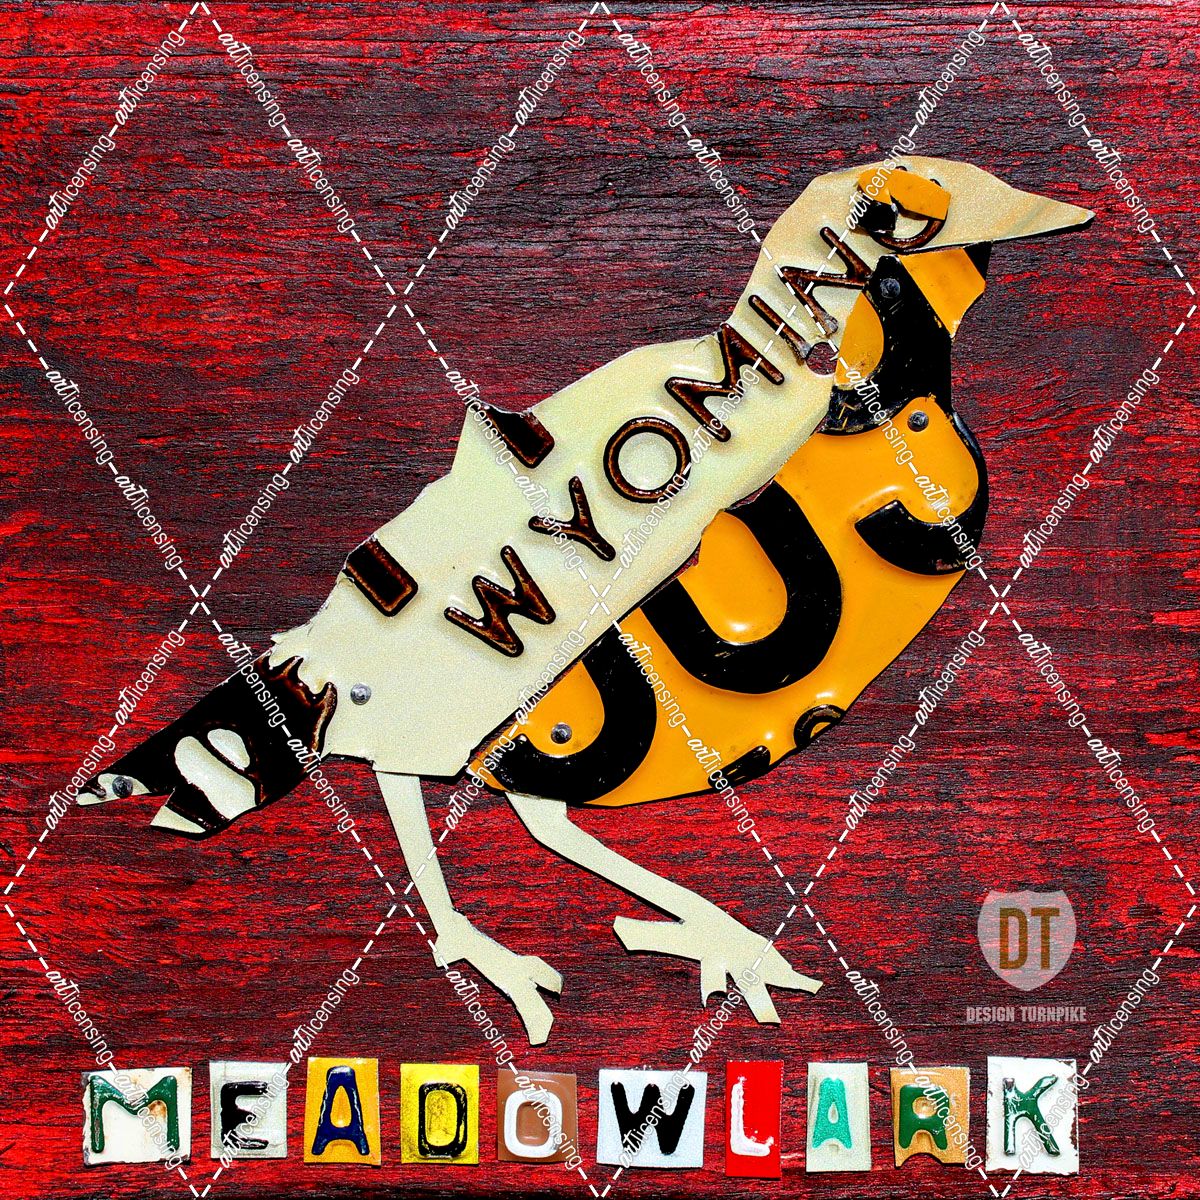 Wyoming Meadowlark